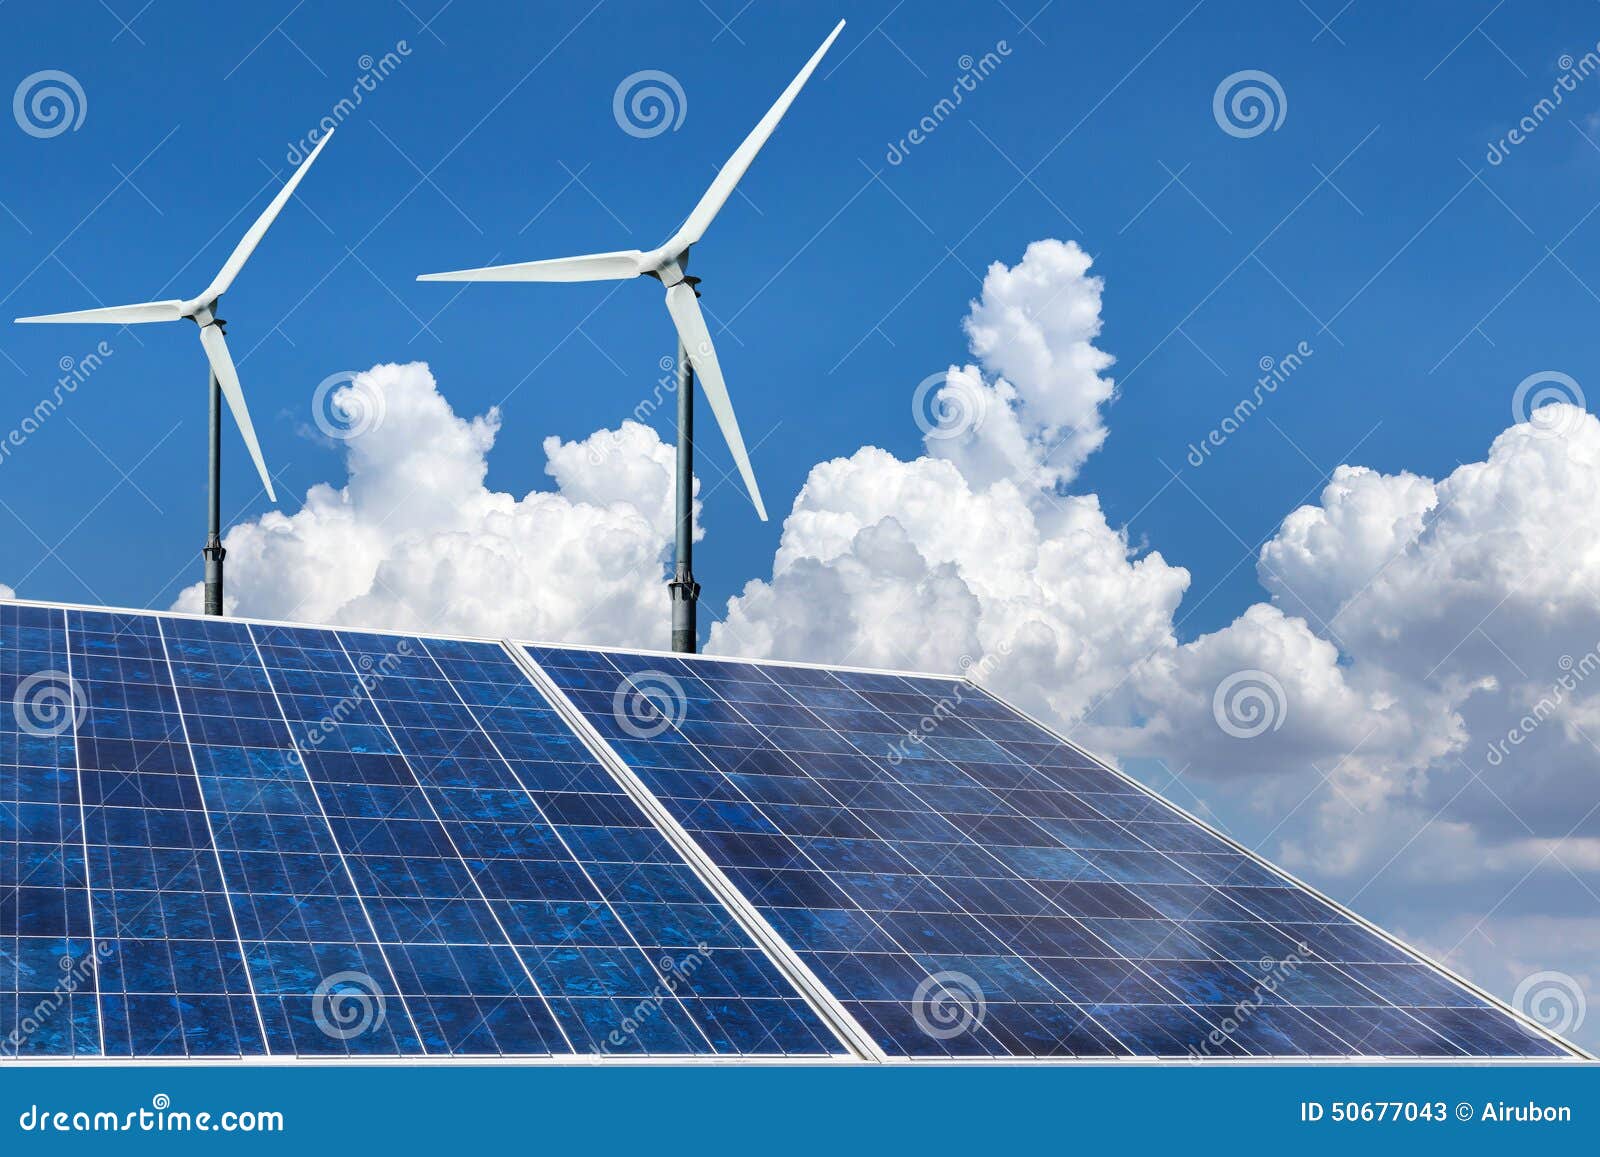 solar panels and wind turbines alternative energy